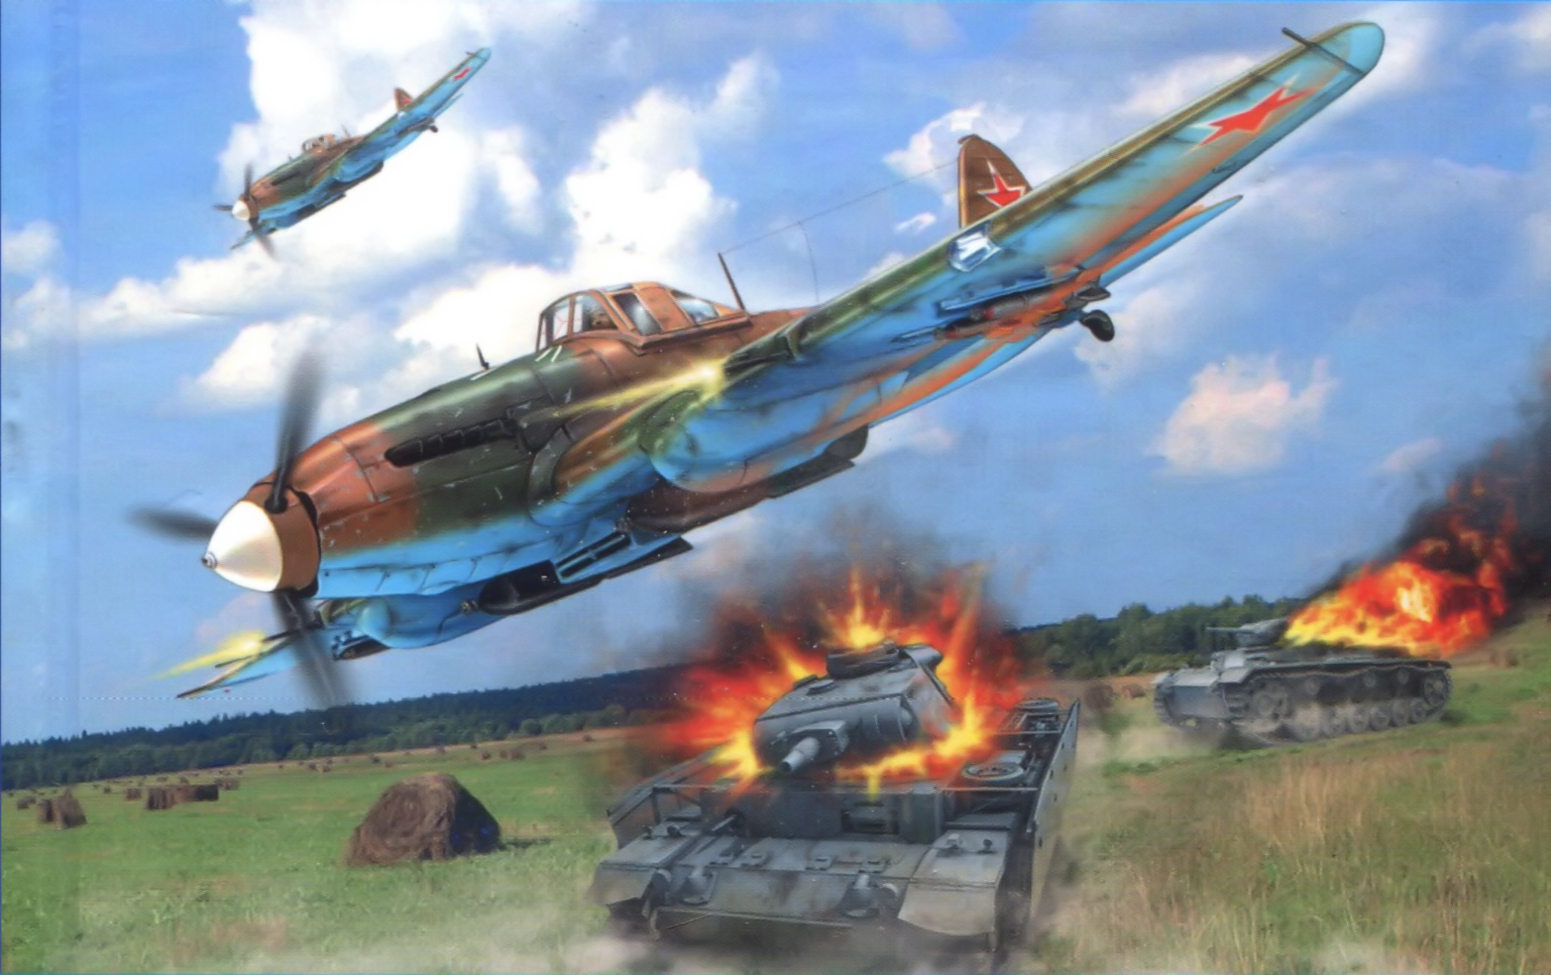 Картинки Танков Самолетов